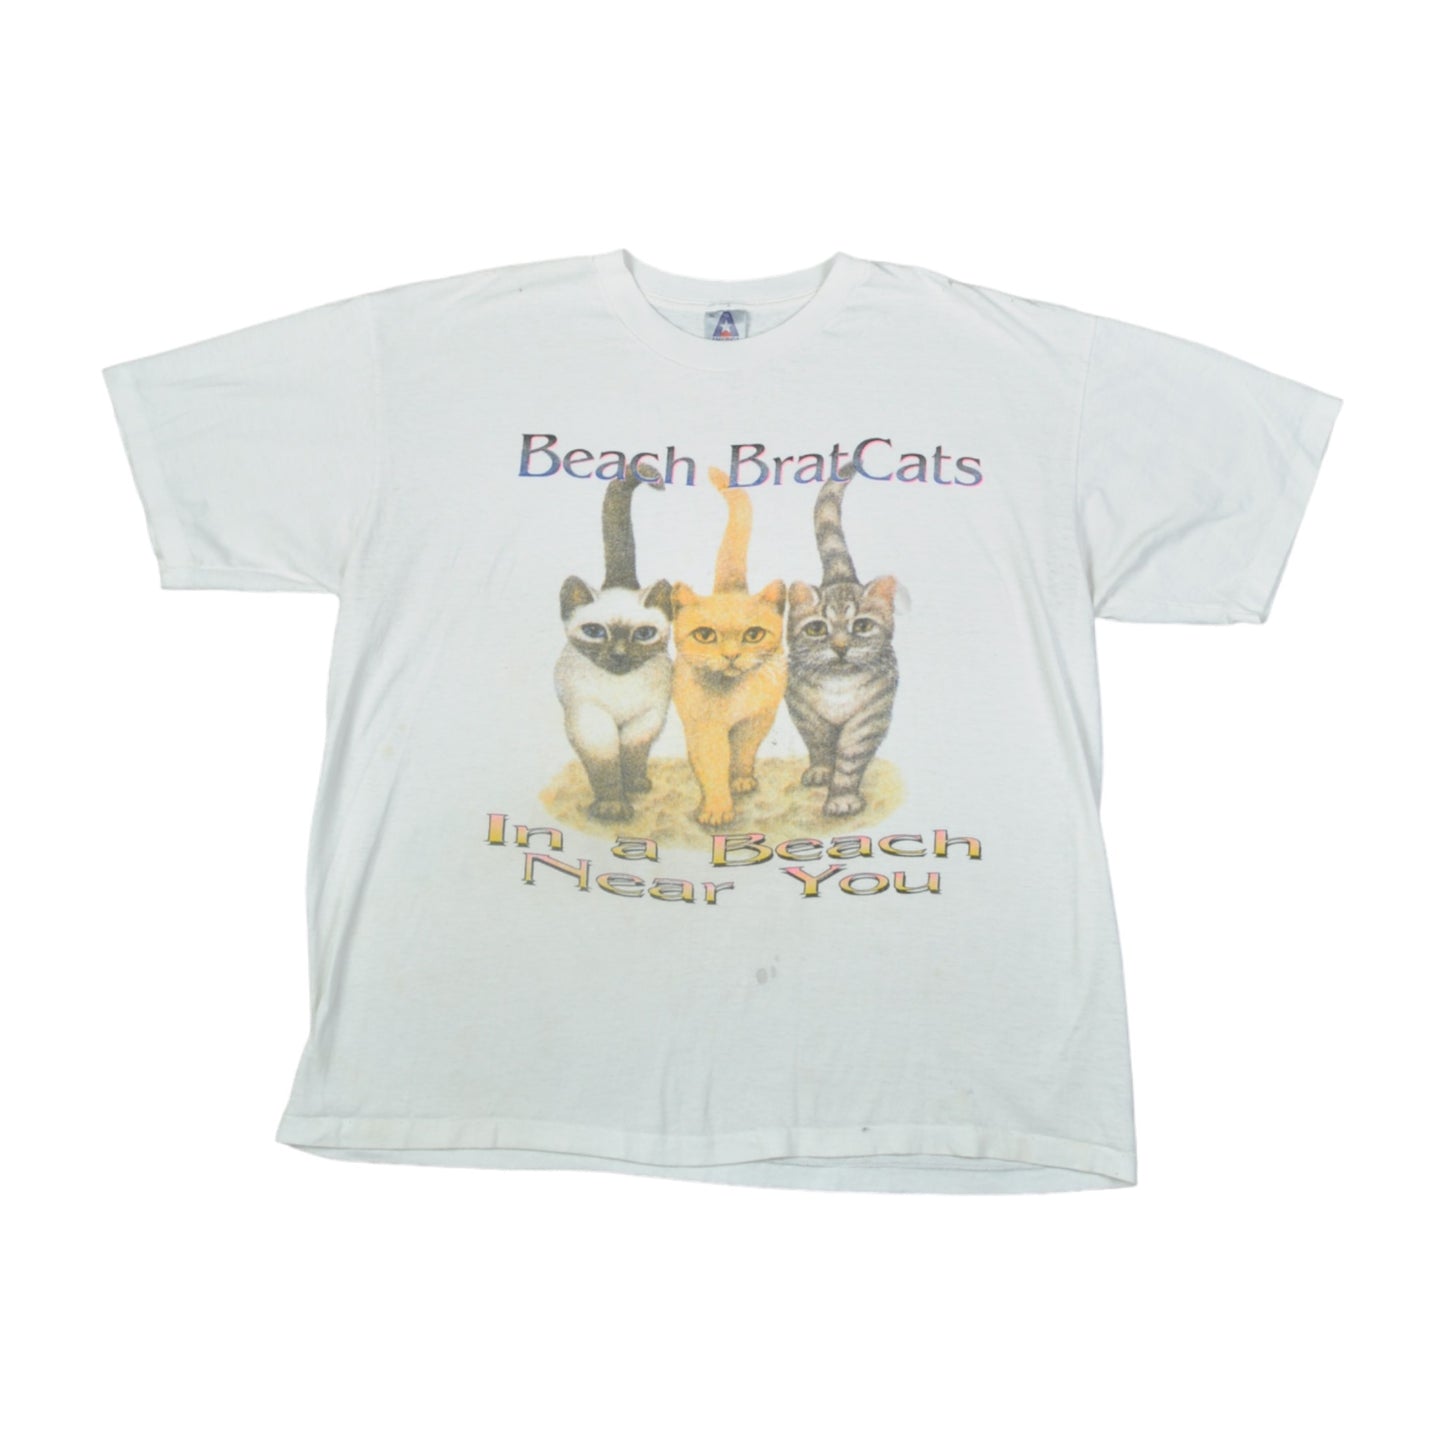 Vintage Beach Brat Cats Single Stitch T-Shirt White Large